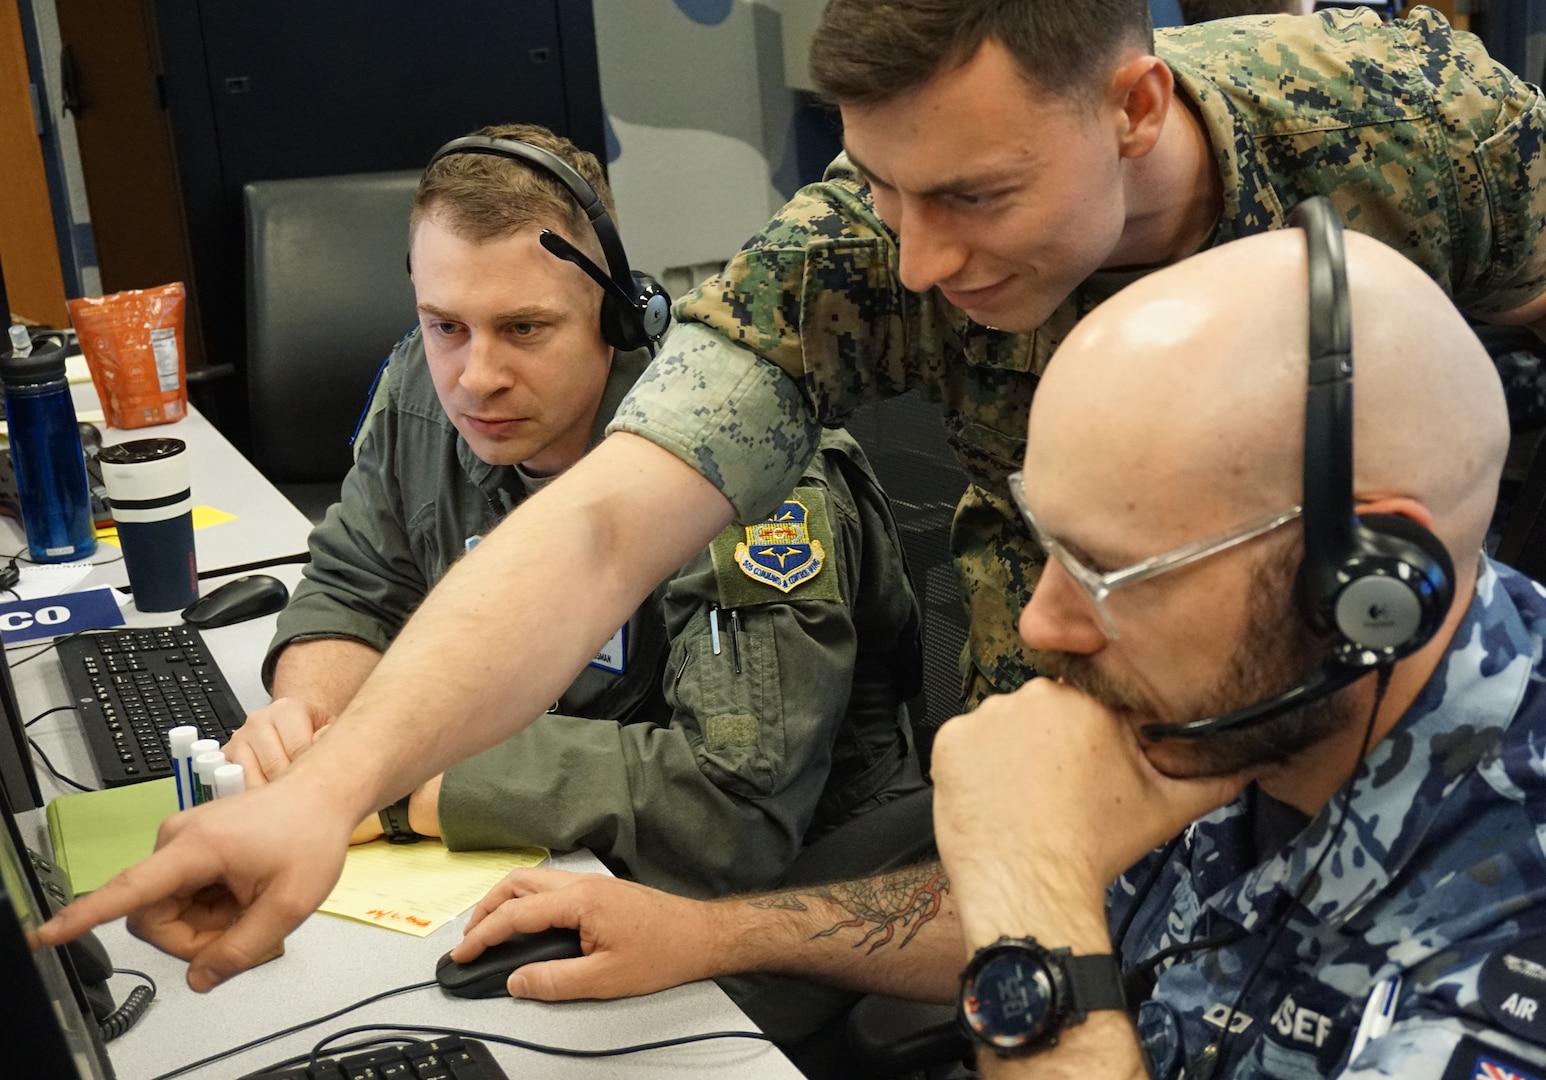 photo: three uniformed military members work at computers